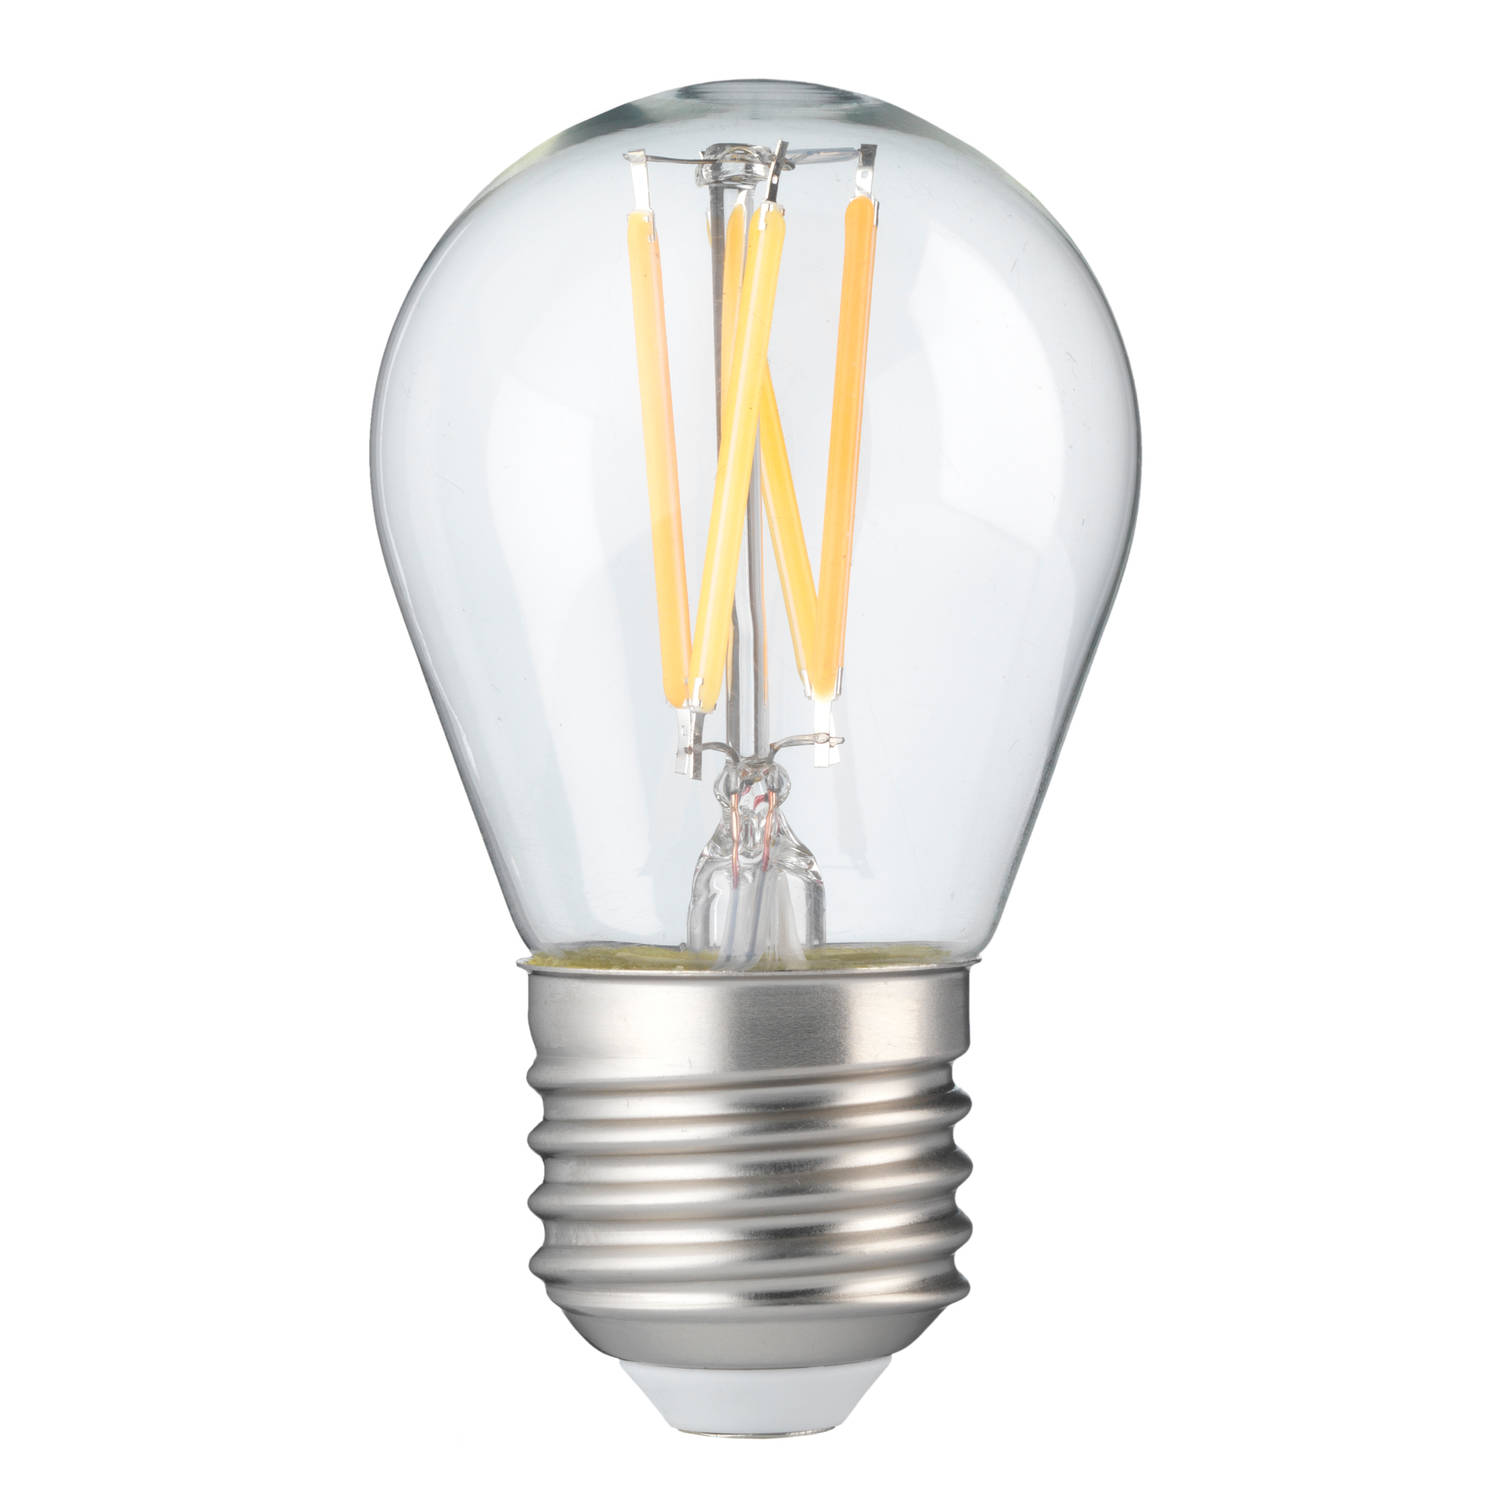 Smart wifi filament LED lamp Alecto